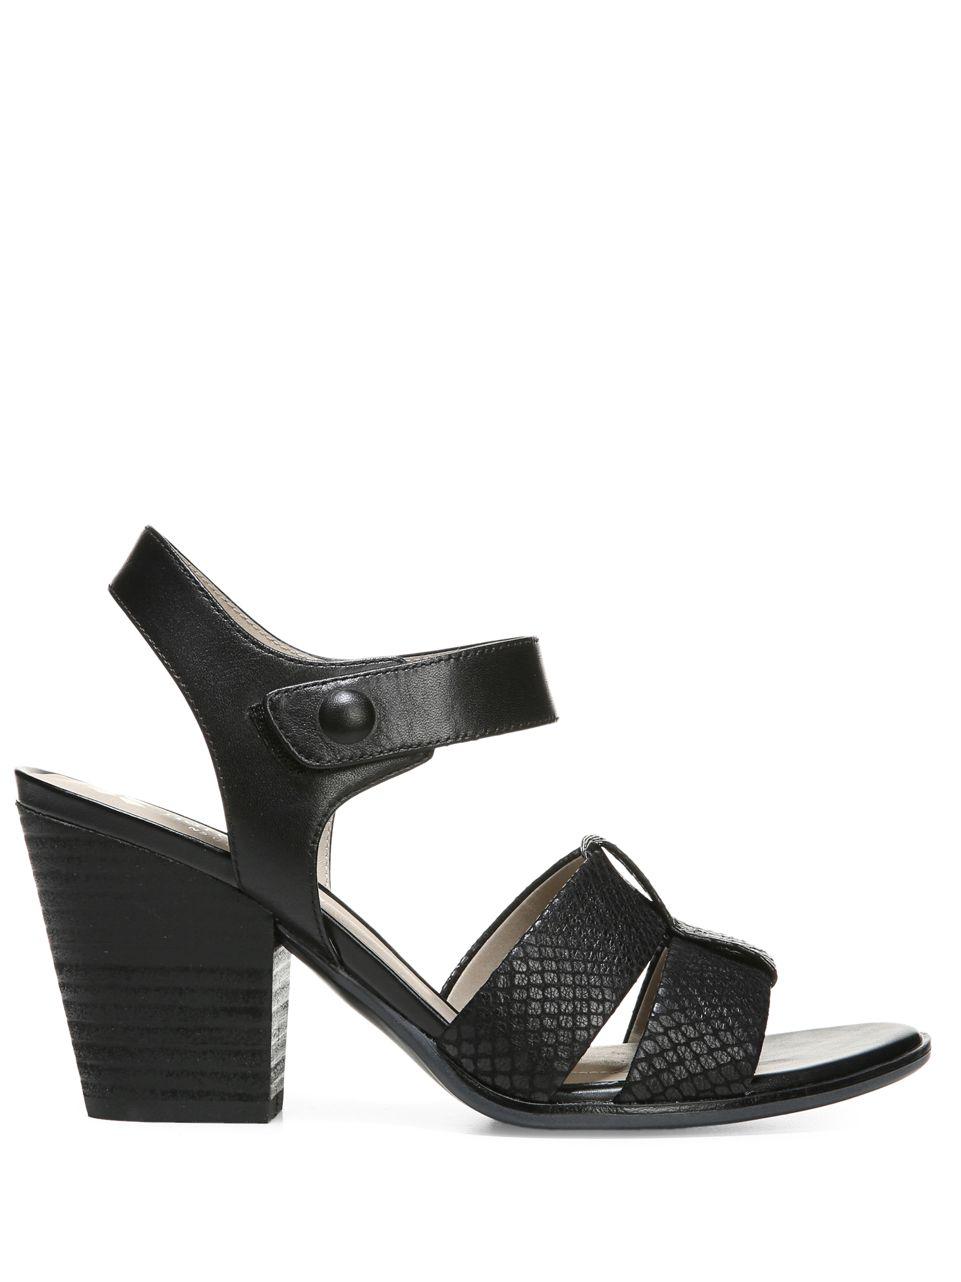 Lyst - Naturalizer Yolanda Leather Block Heel Sandals in Black